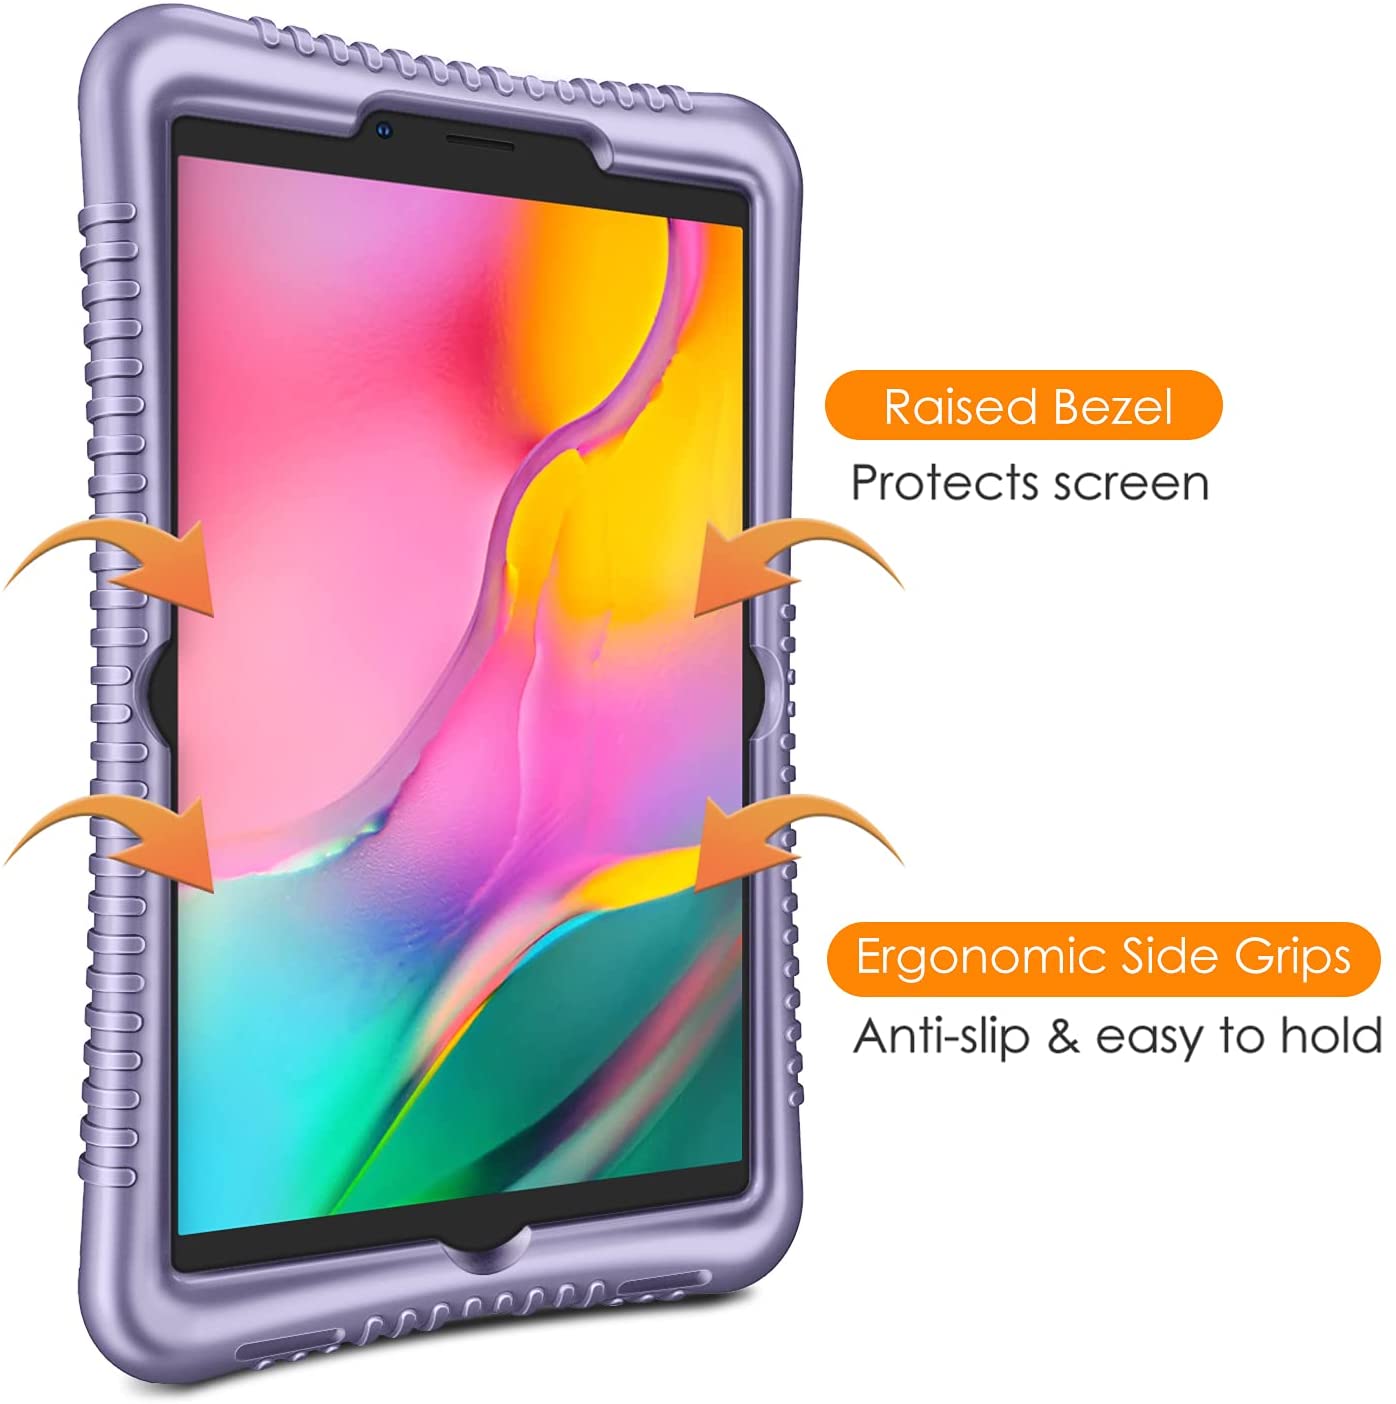 Samsung Galaxy Tab A 8.0 (2019) Silicone Case (No S Pen Model)